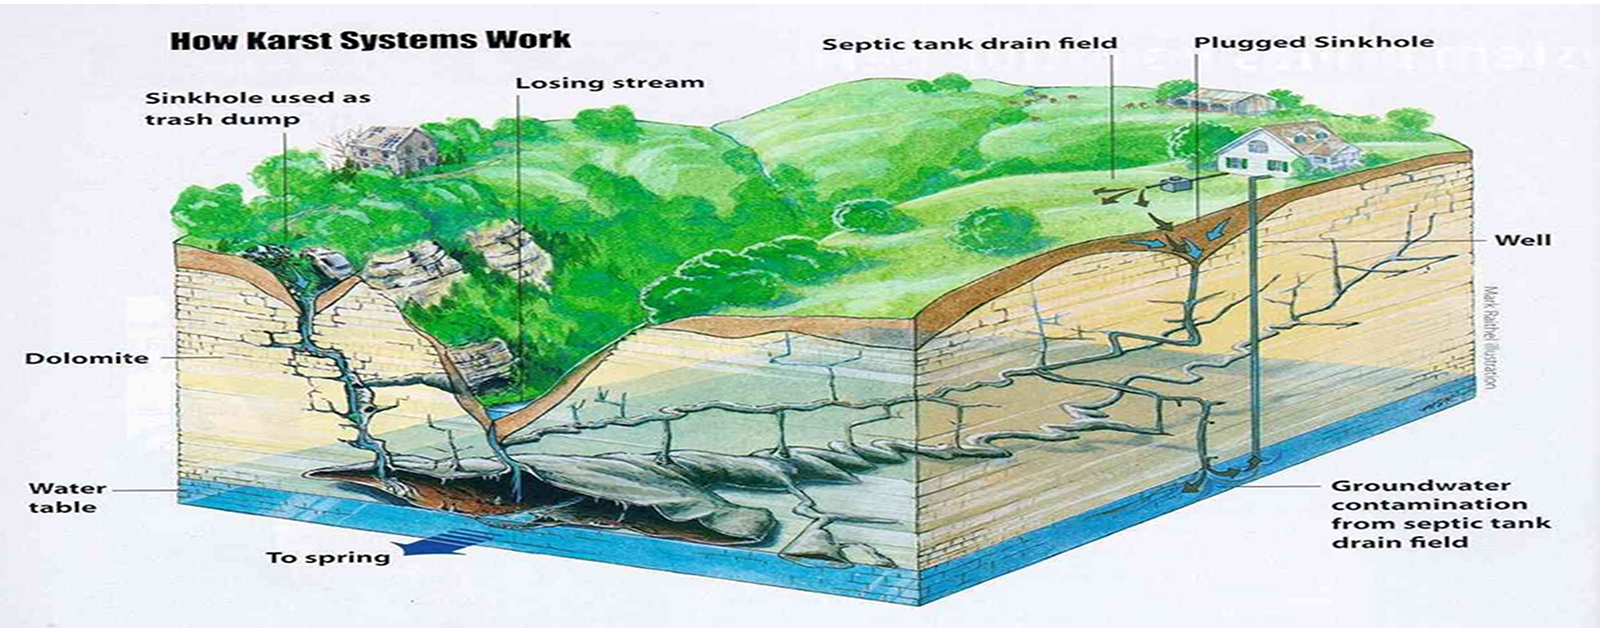 Illustration of karst groundwater aquifer contamination